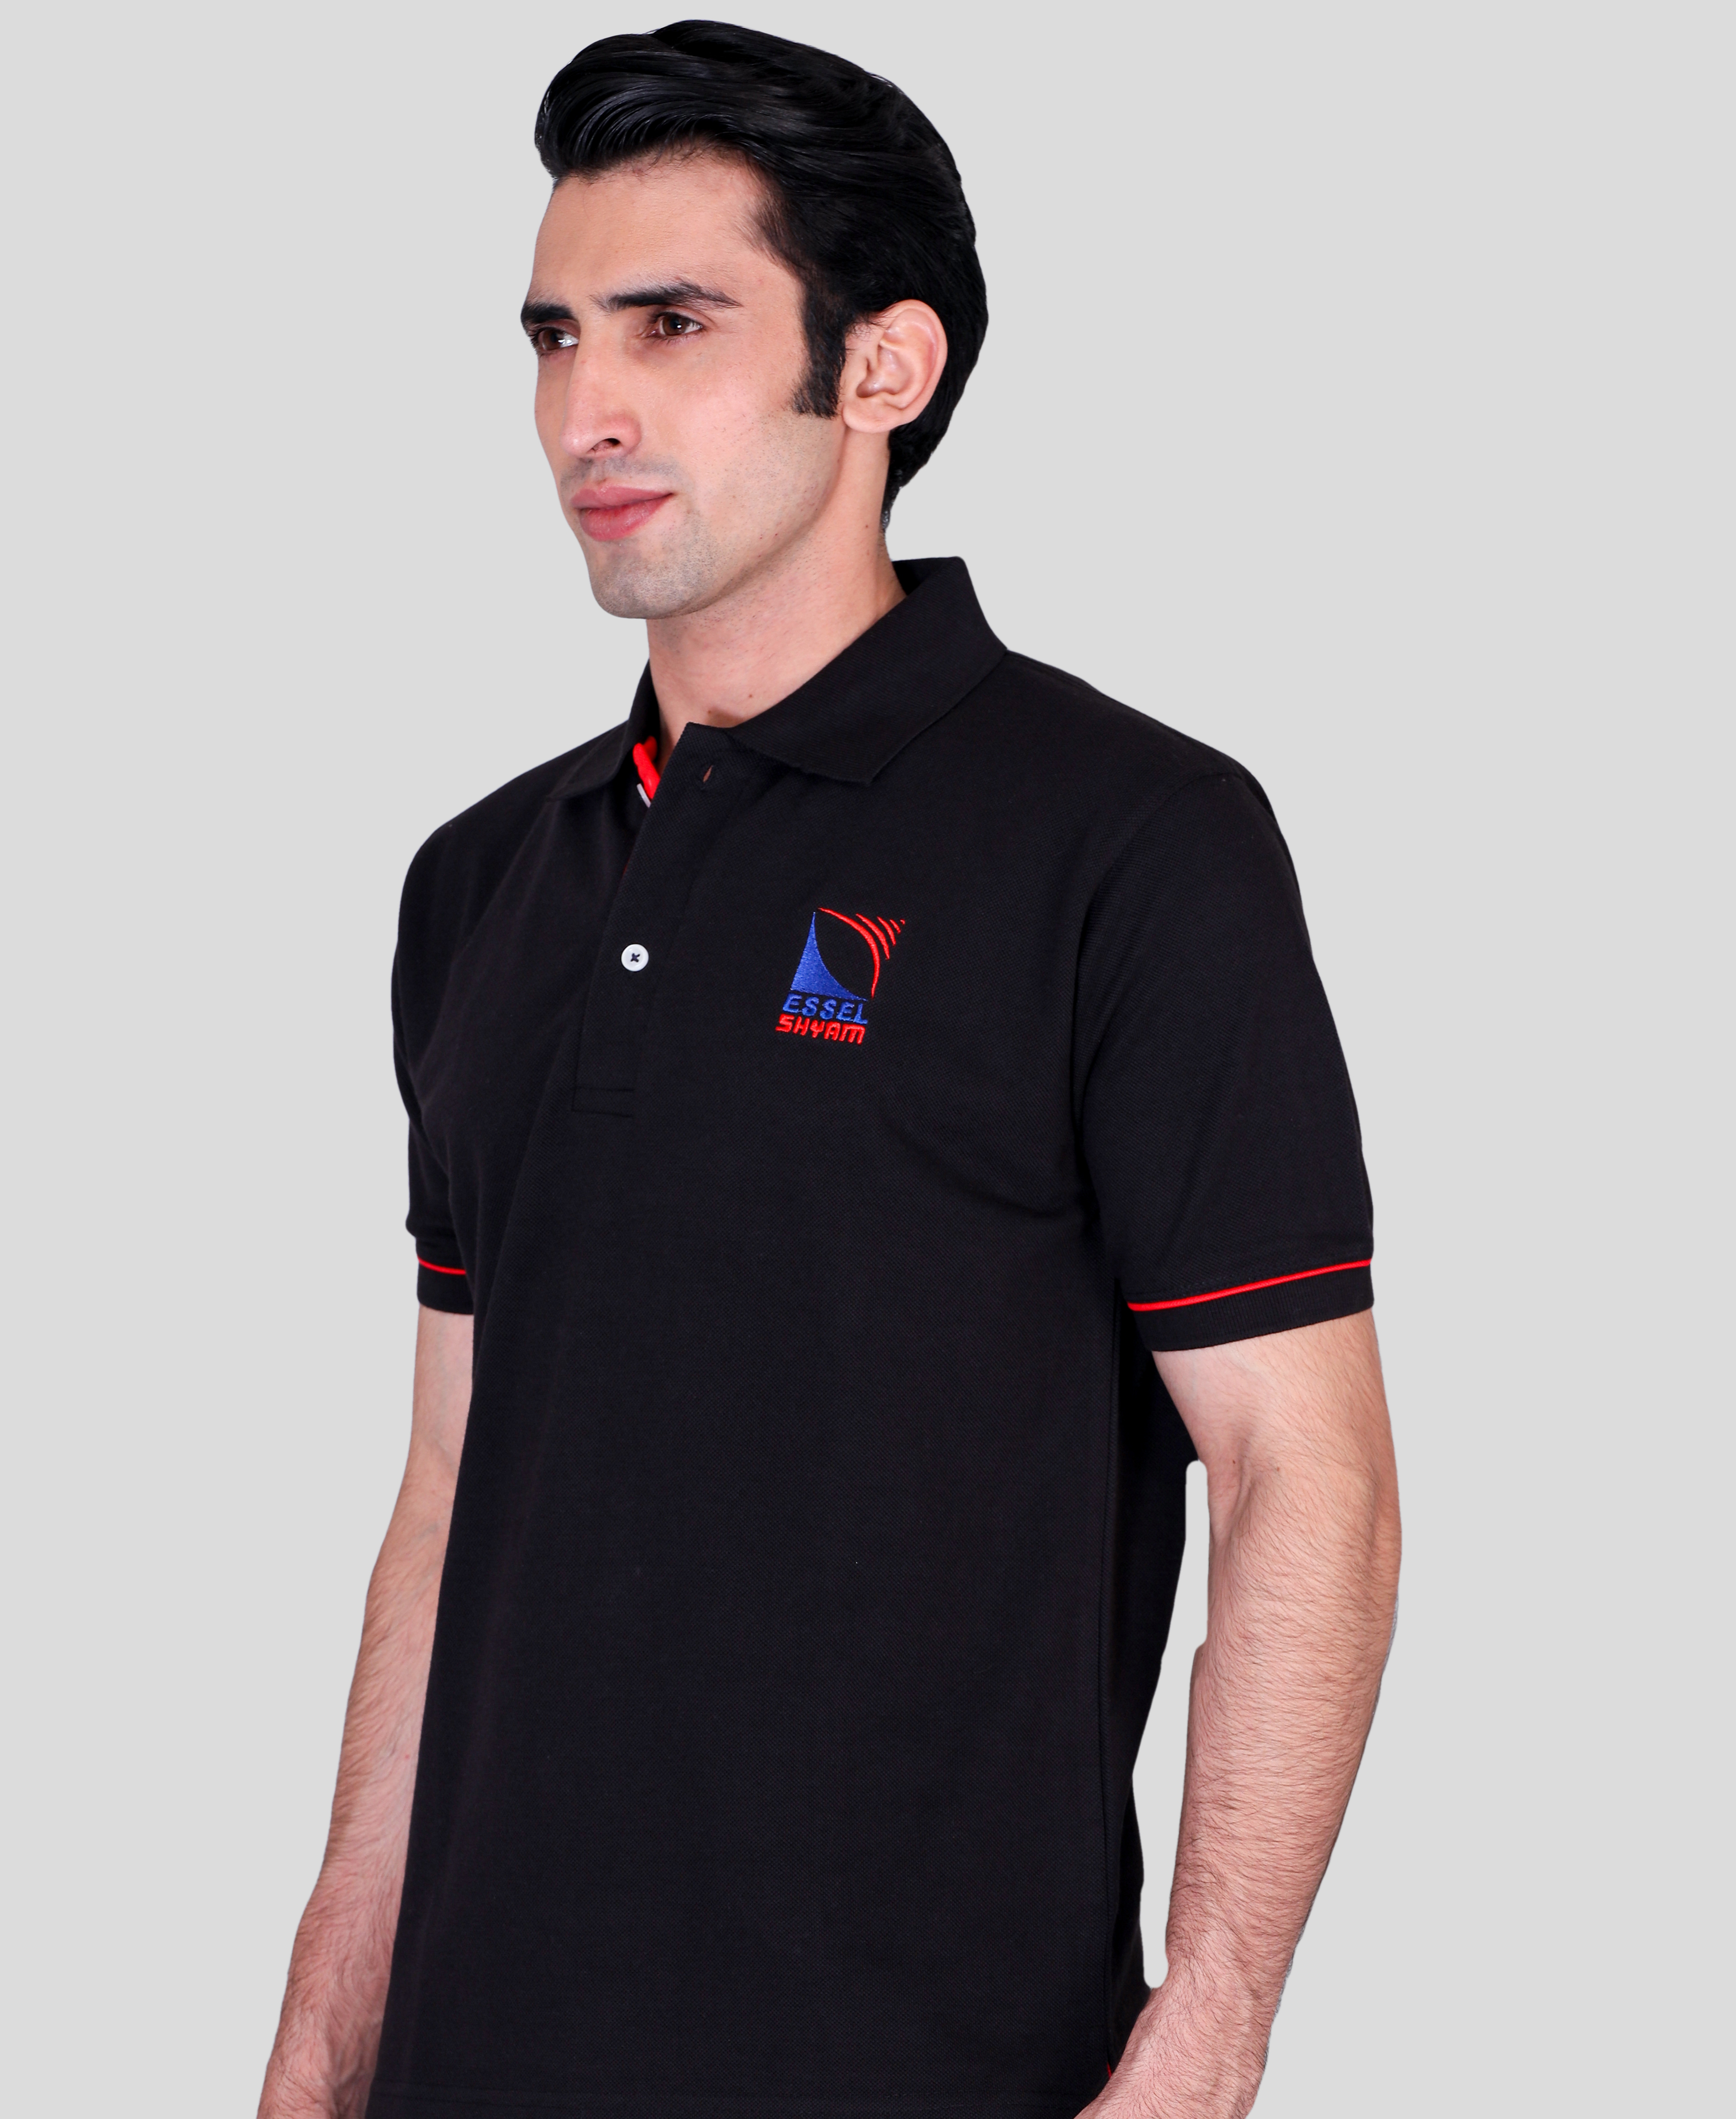 Essel Shyam black custom polo t-shirts with company logo